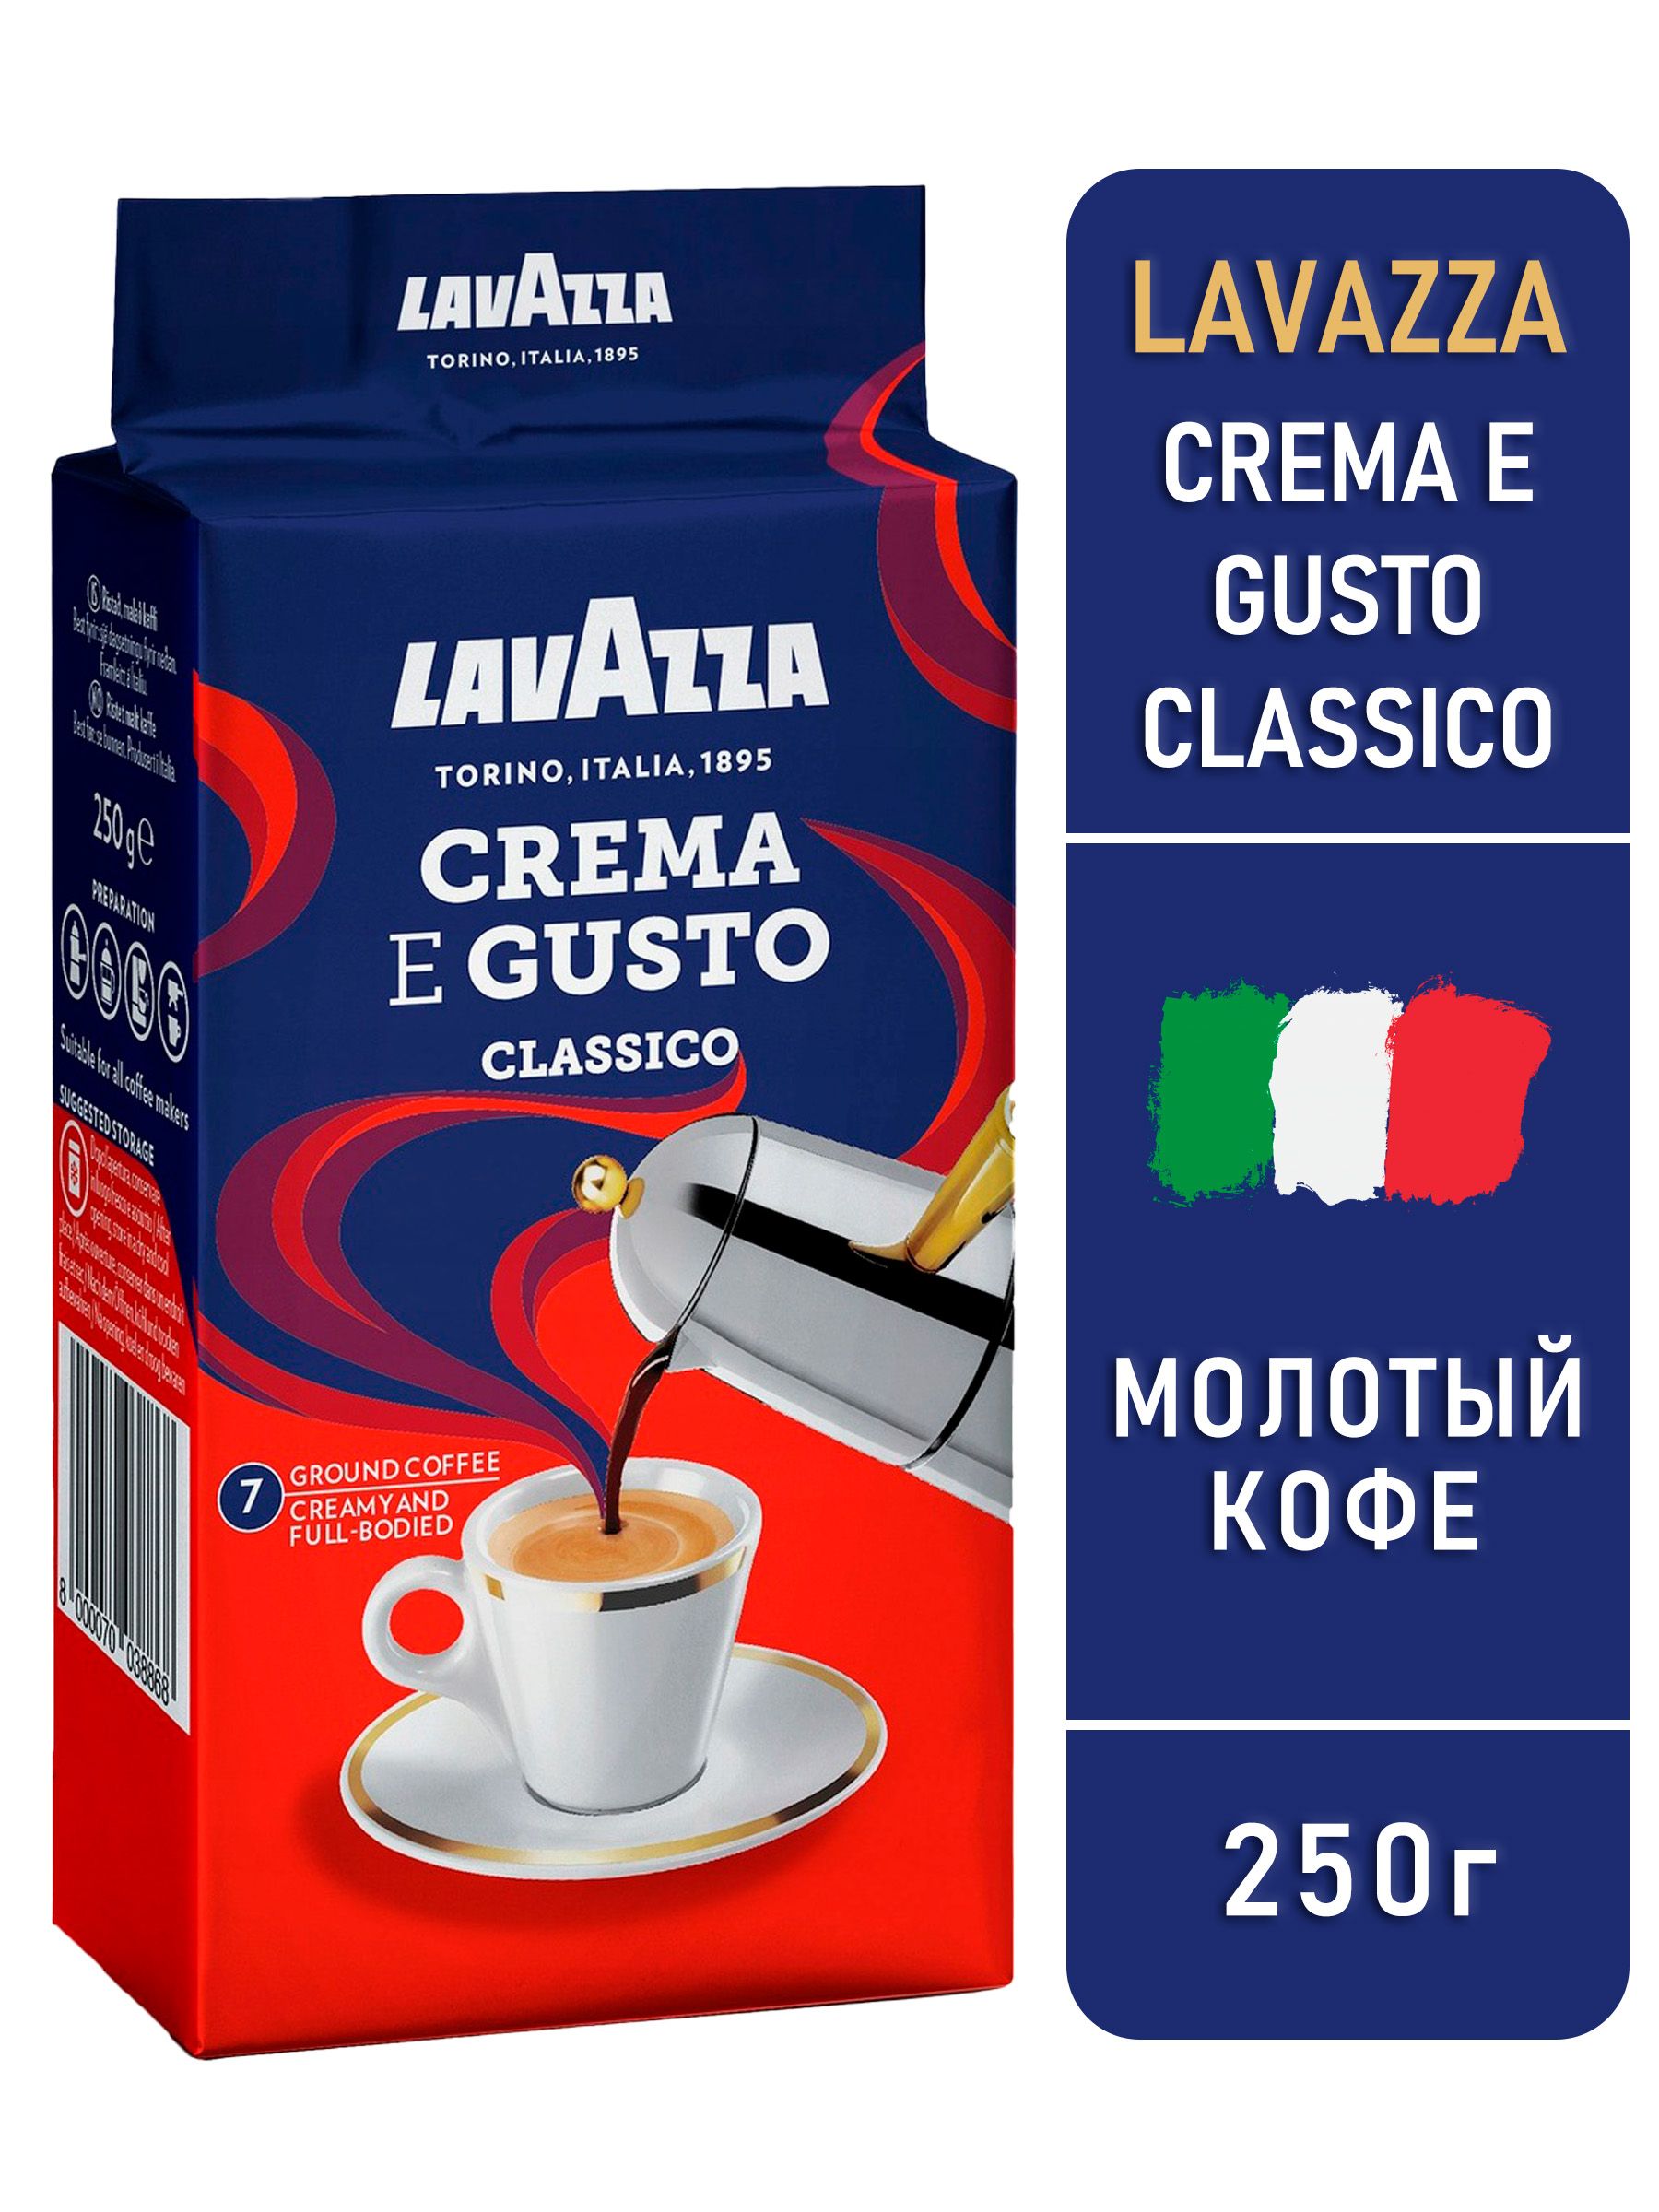 Lavazza crema e gusto кофе молотый 250 г. Кофе молотый Lavazza Rossa 250 g. Кофе молотый Lavazza crema e gusto БЖУ. Кофе молотый Lavazza custo 250 г. Lavazza crema отзывы